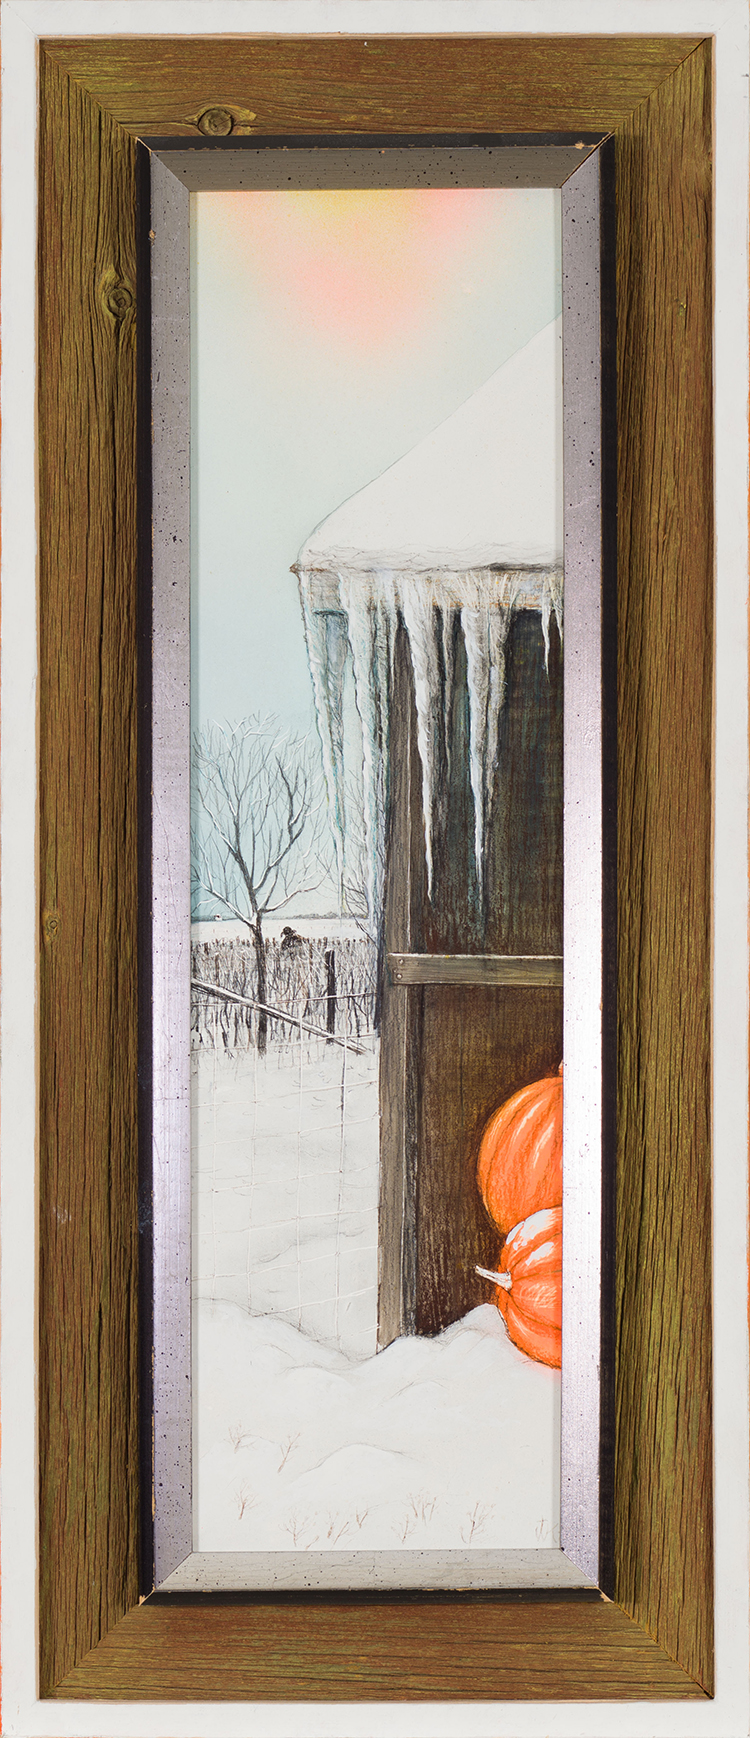 Pumpkins in Winter by William Kurelek